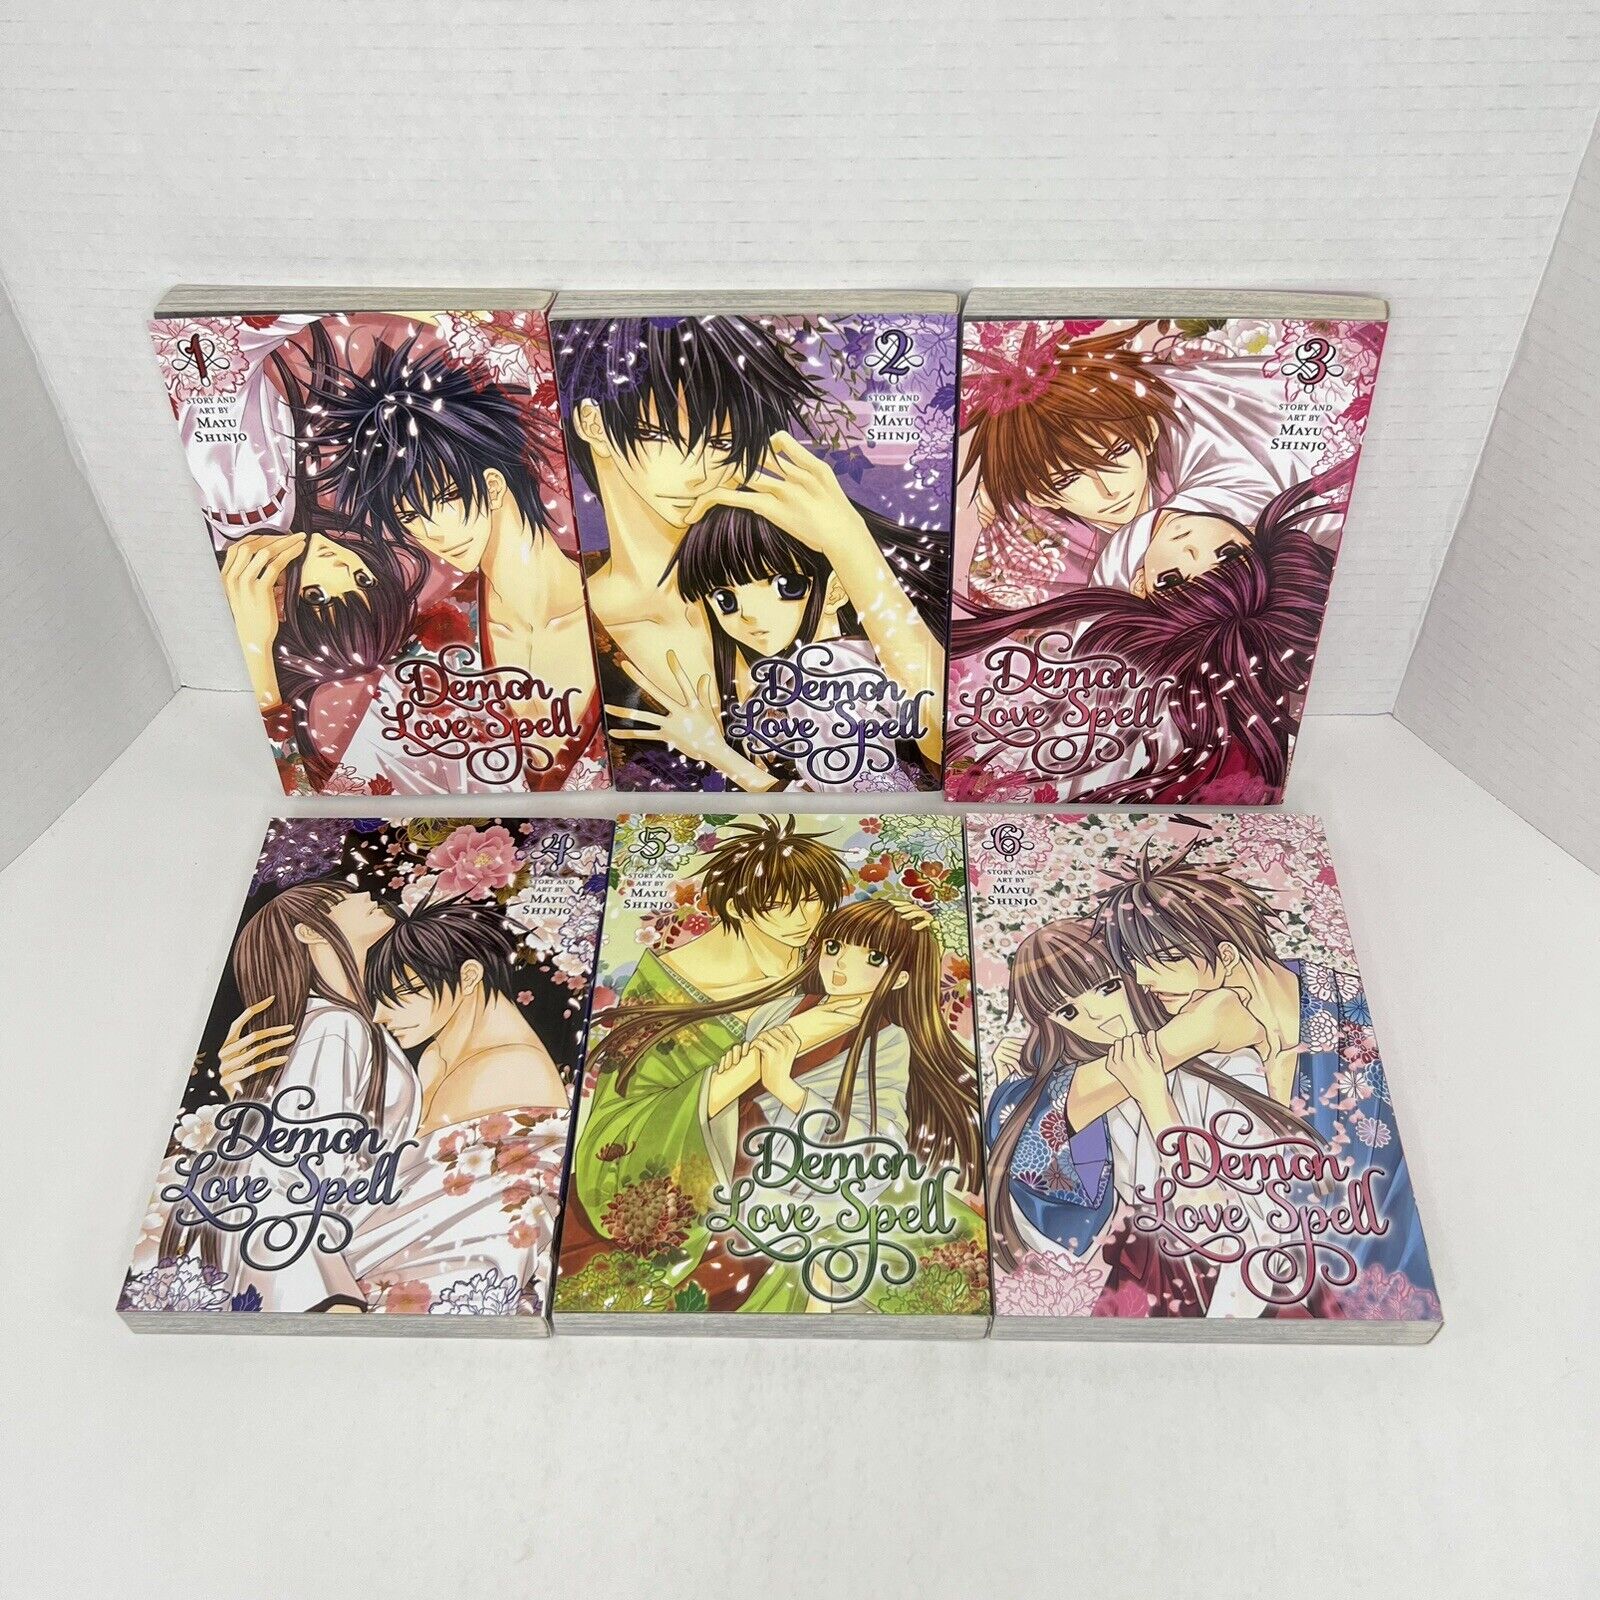 DEMON LOVE SPELL English Manga Vol. 1-6 COMPLETE by Mayo Shinjo; 1st Printings